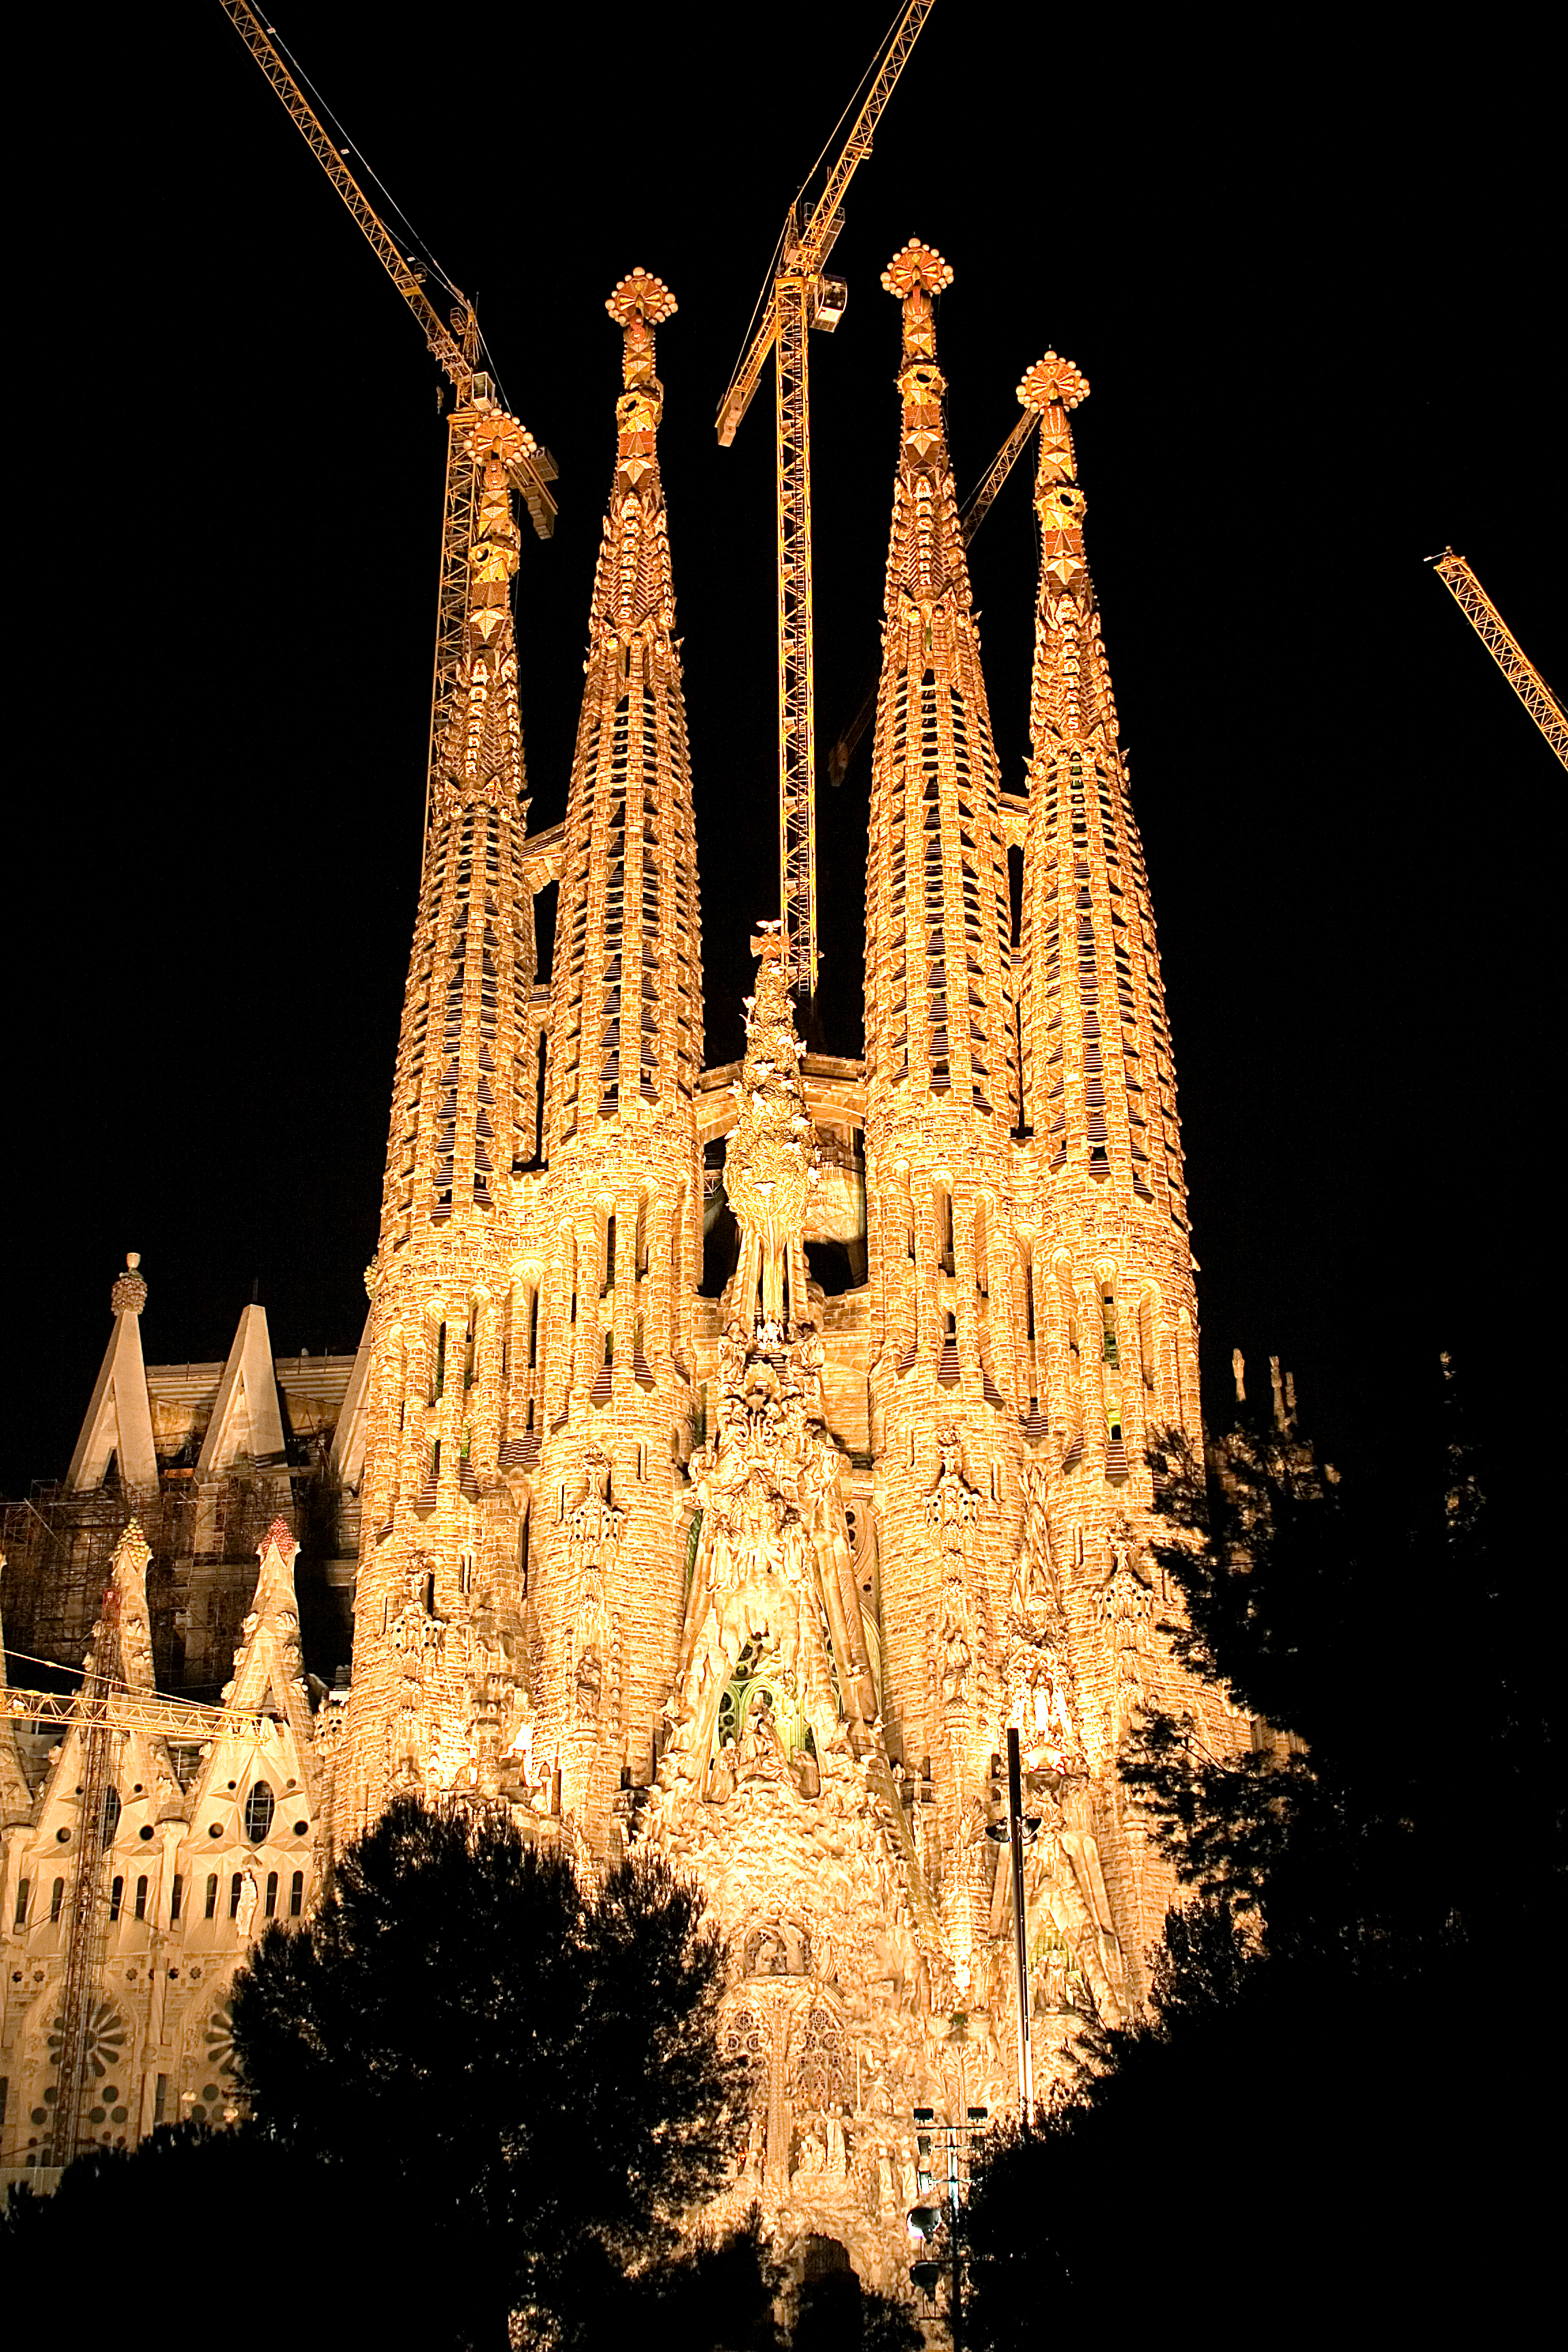 File:Sagrada familia by night 2006.jpg - Wikimedia Commons